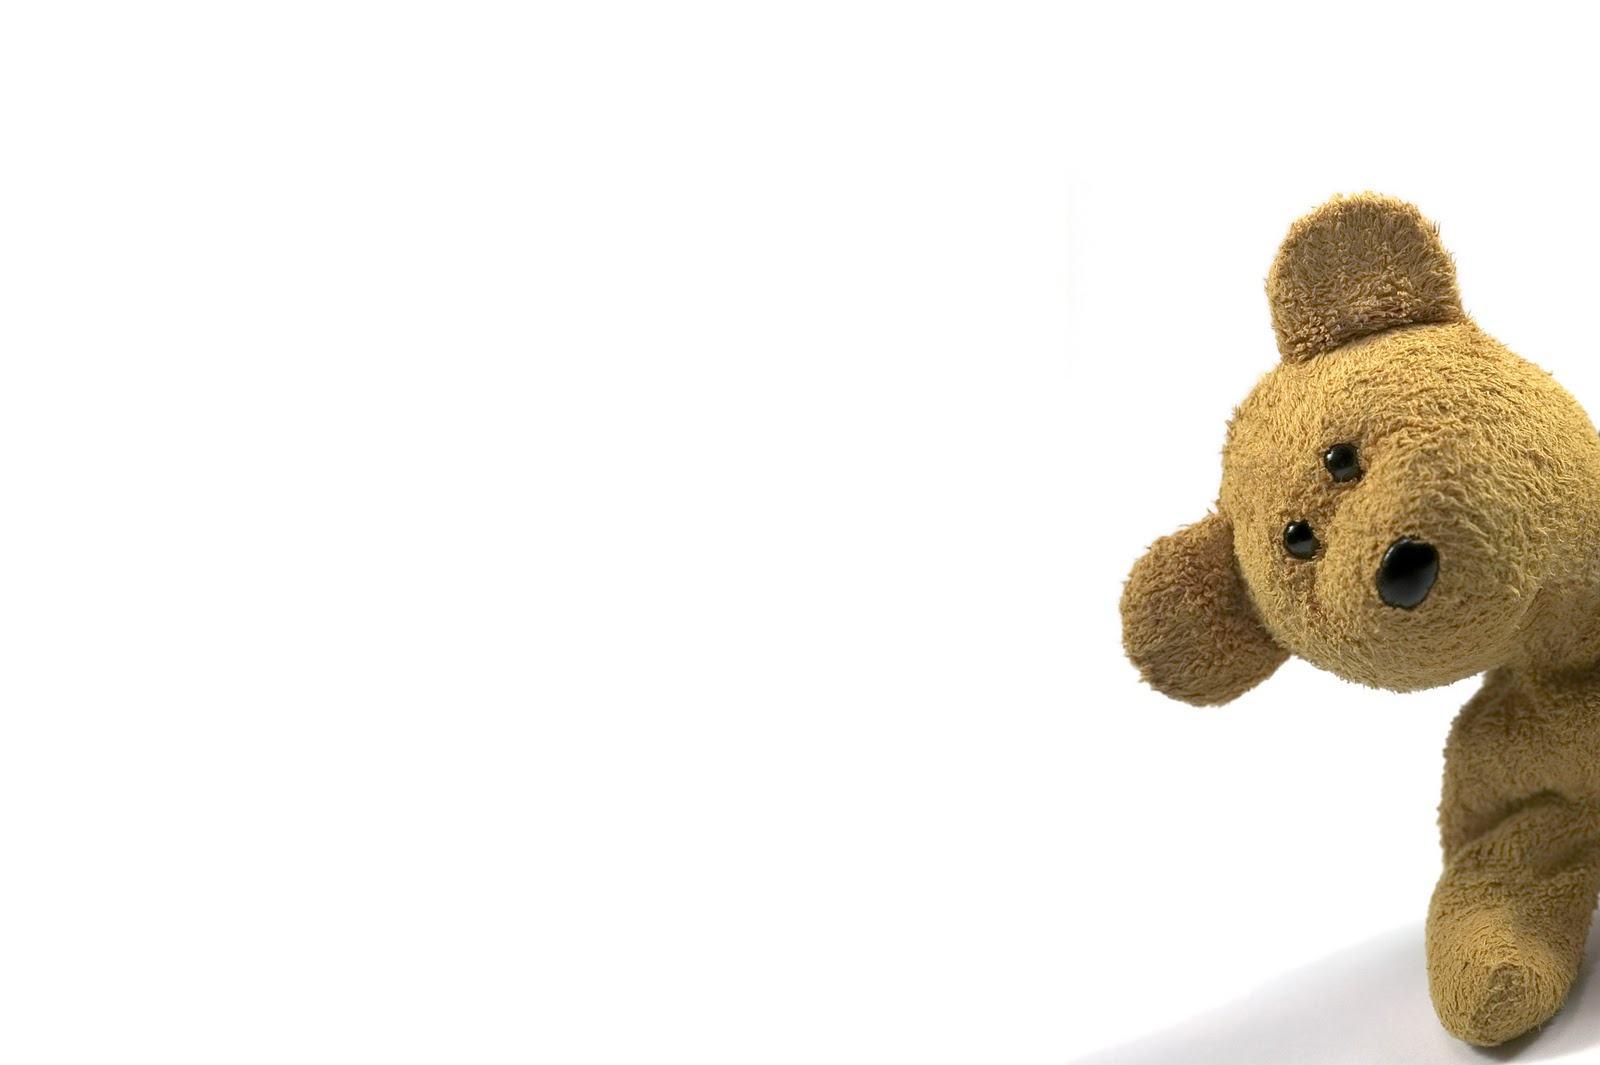 Cute Teddy Bear Wallpaper Free Download For Mobile. (65++ Wallpaper)